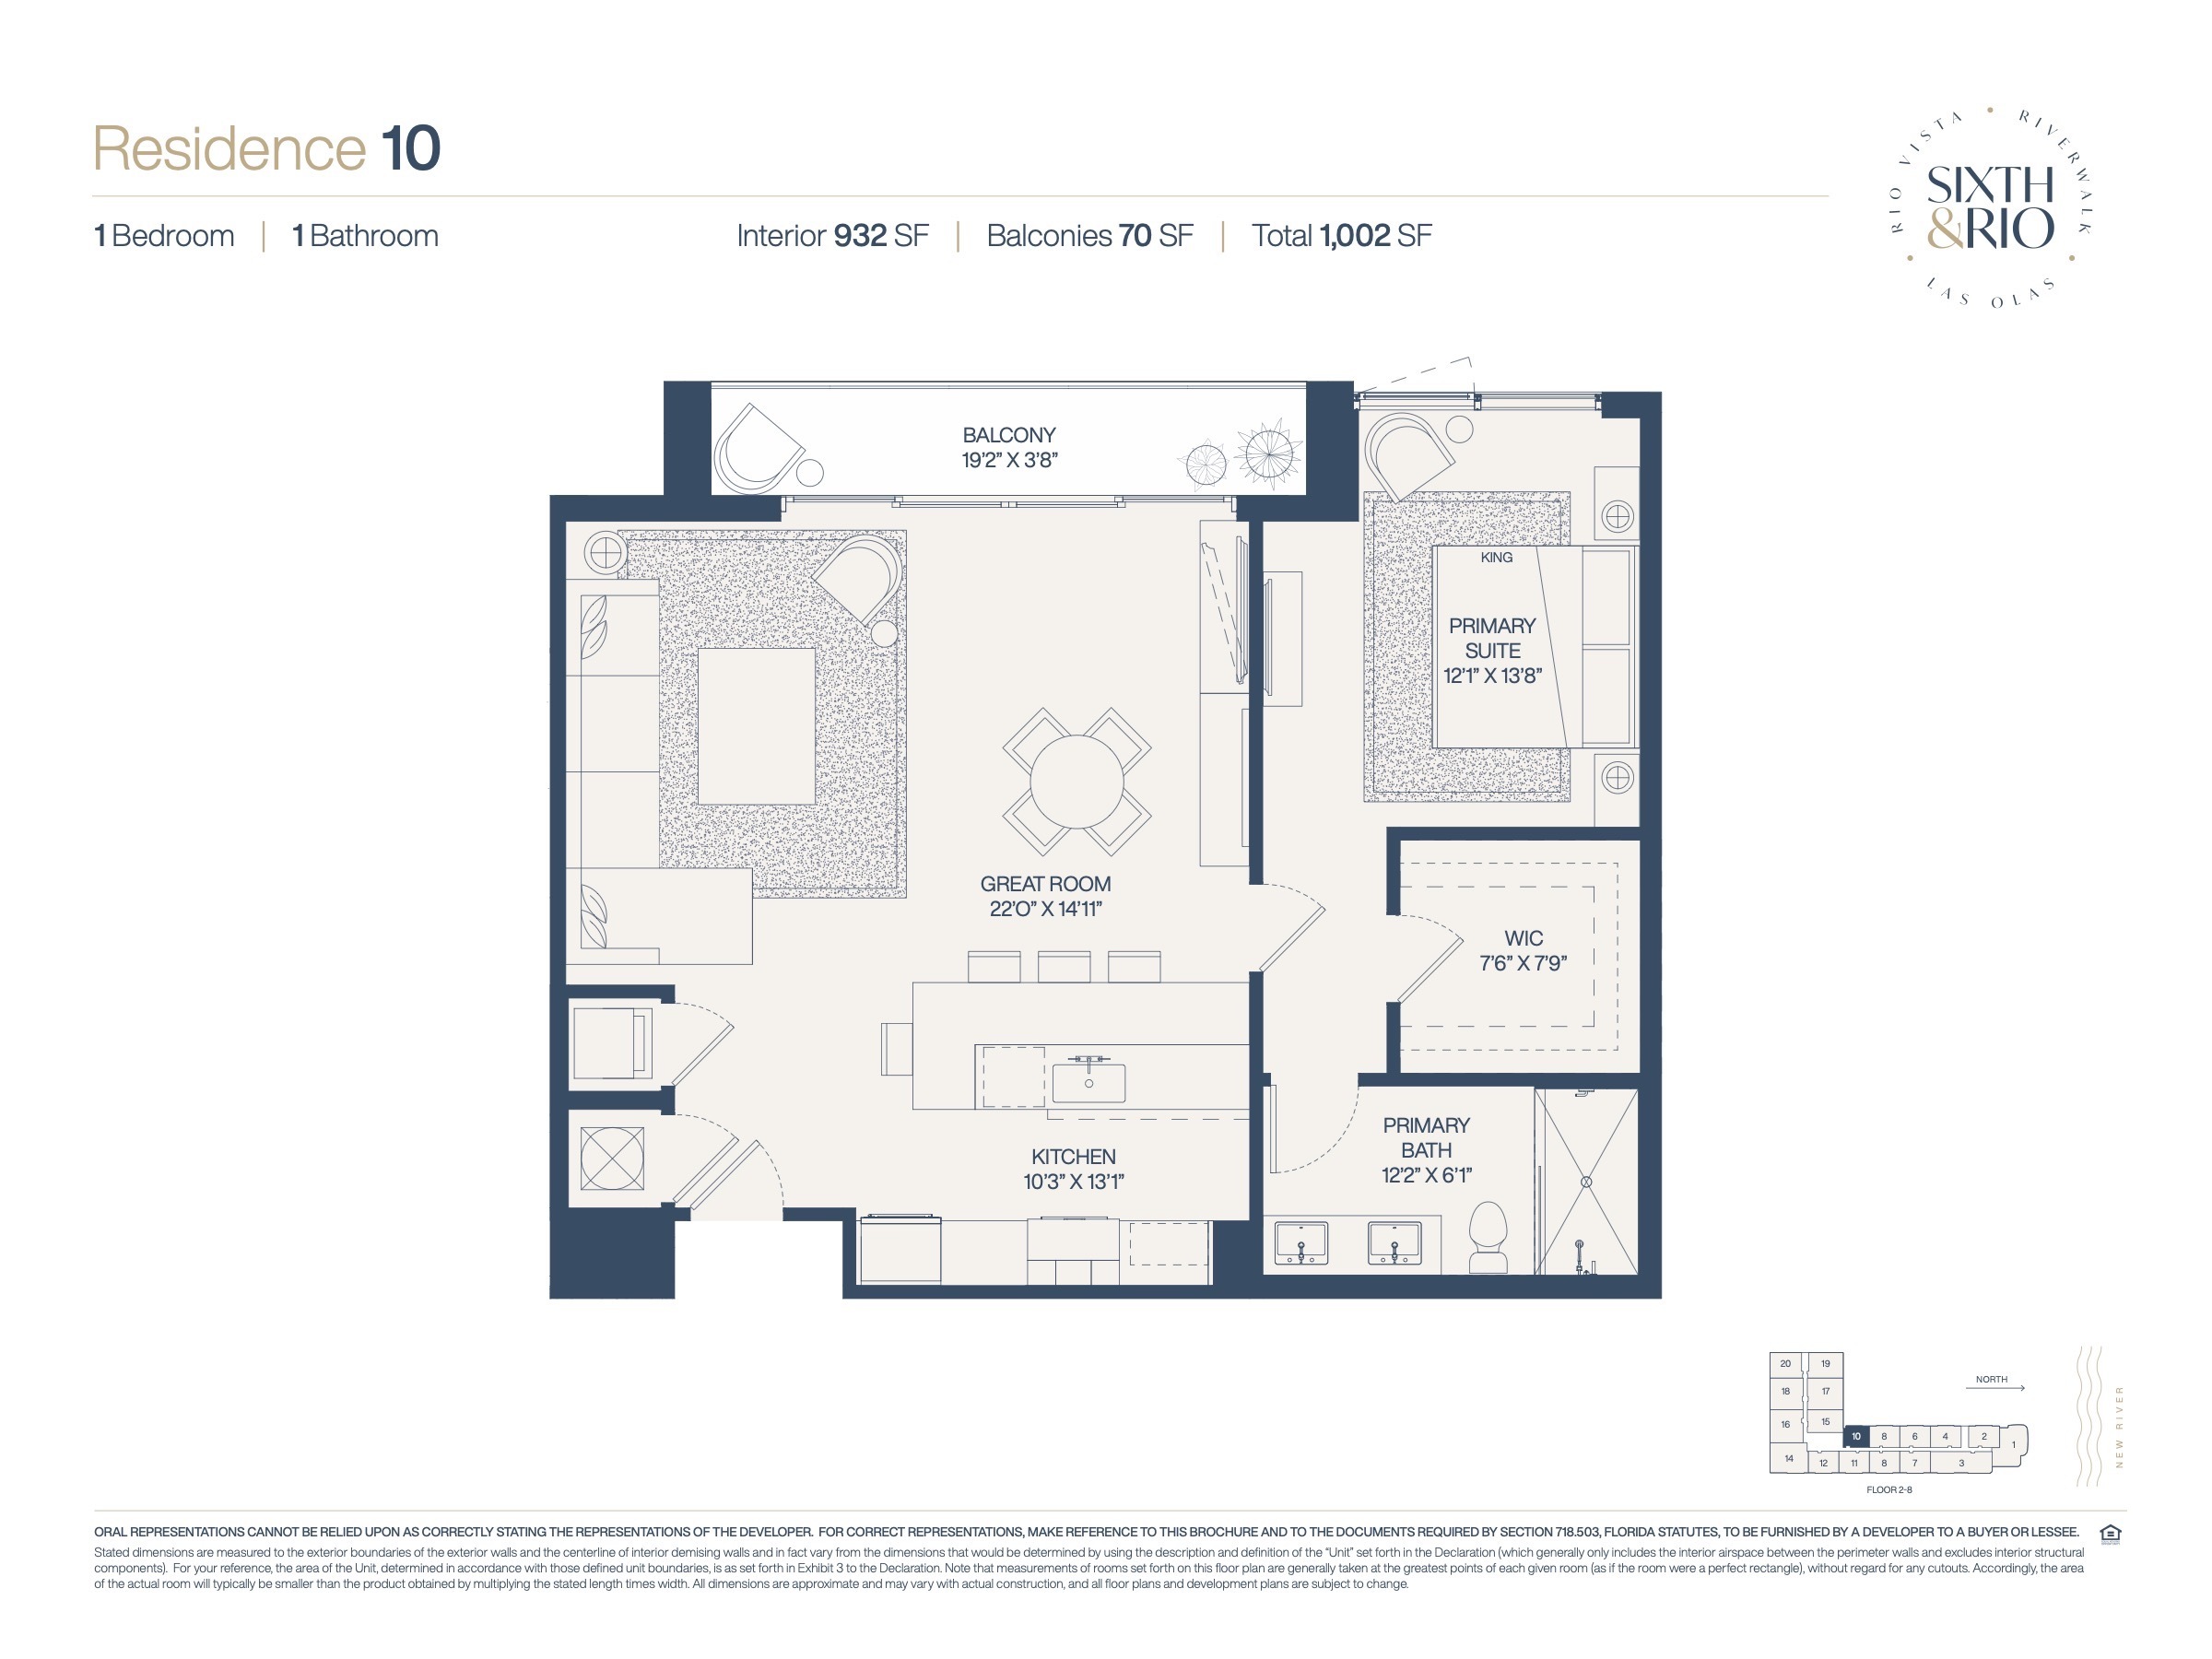 Floor Plan for Sixth & Rio Fort Lauderdale Floorplans, Residence 10